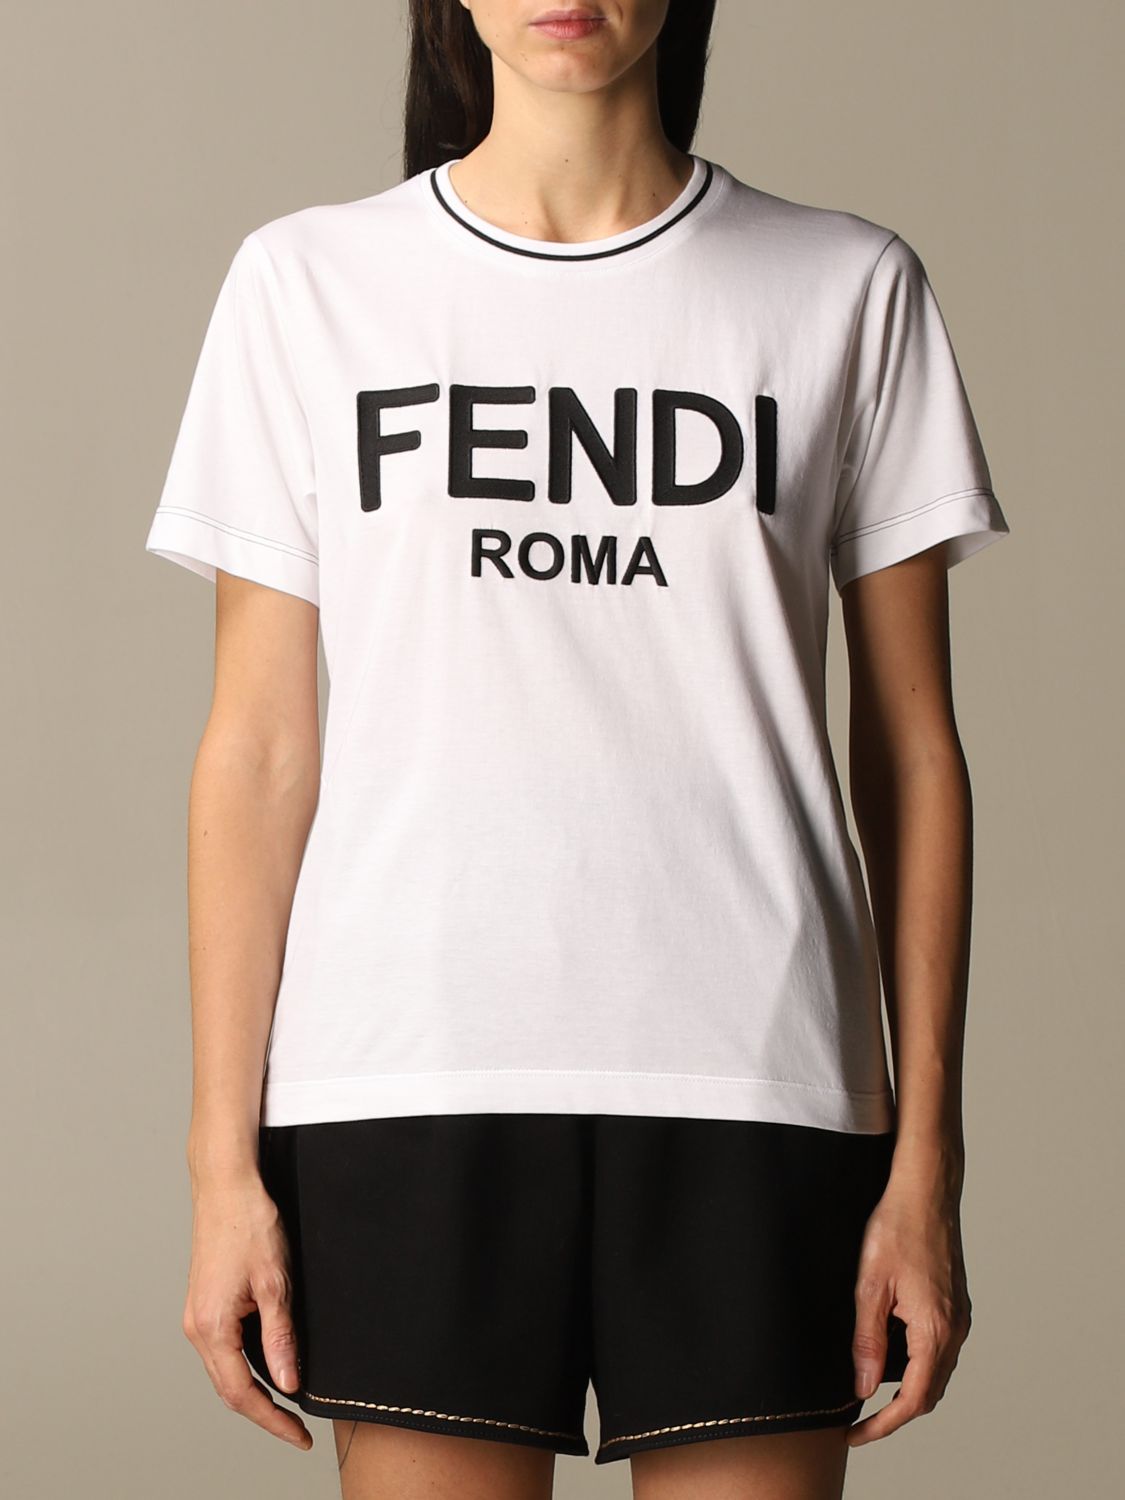 fendi print shirt womens